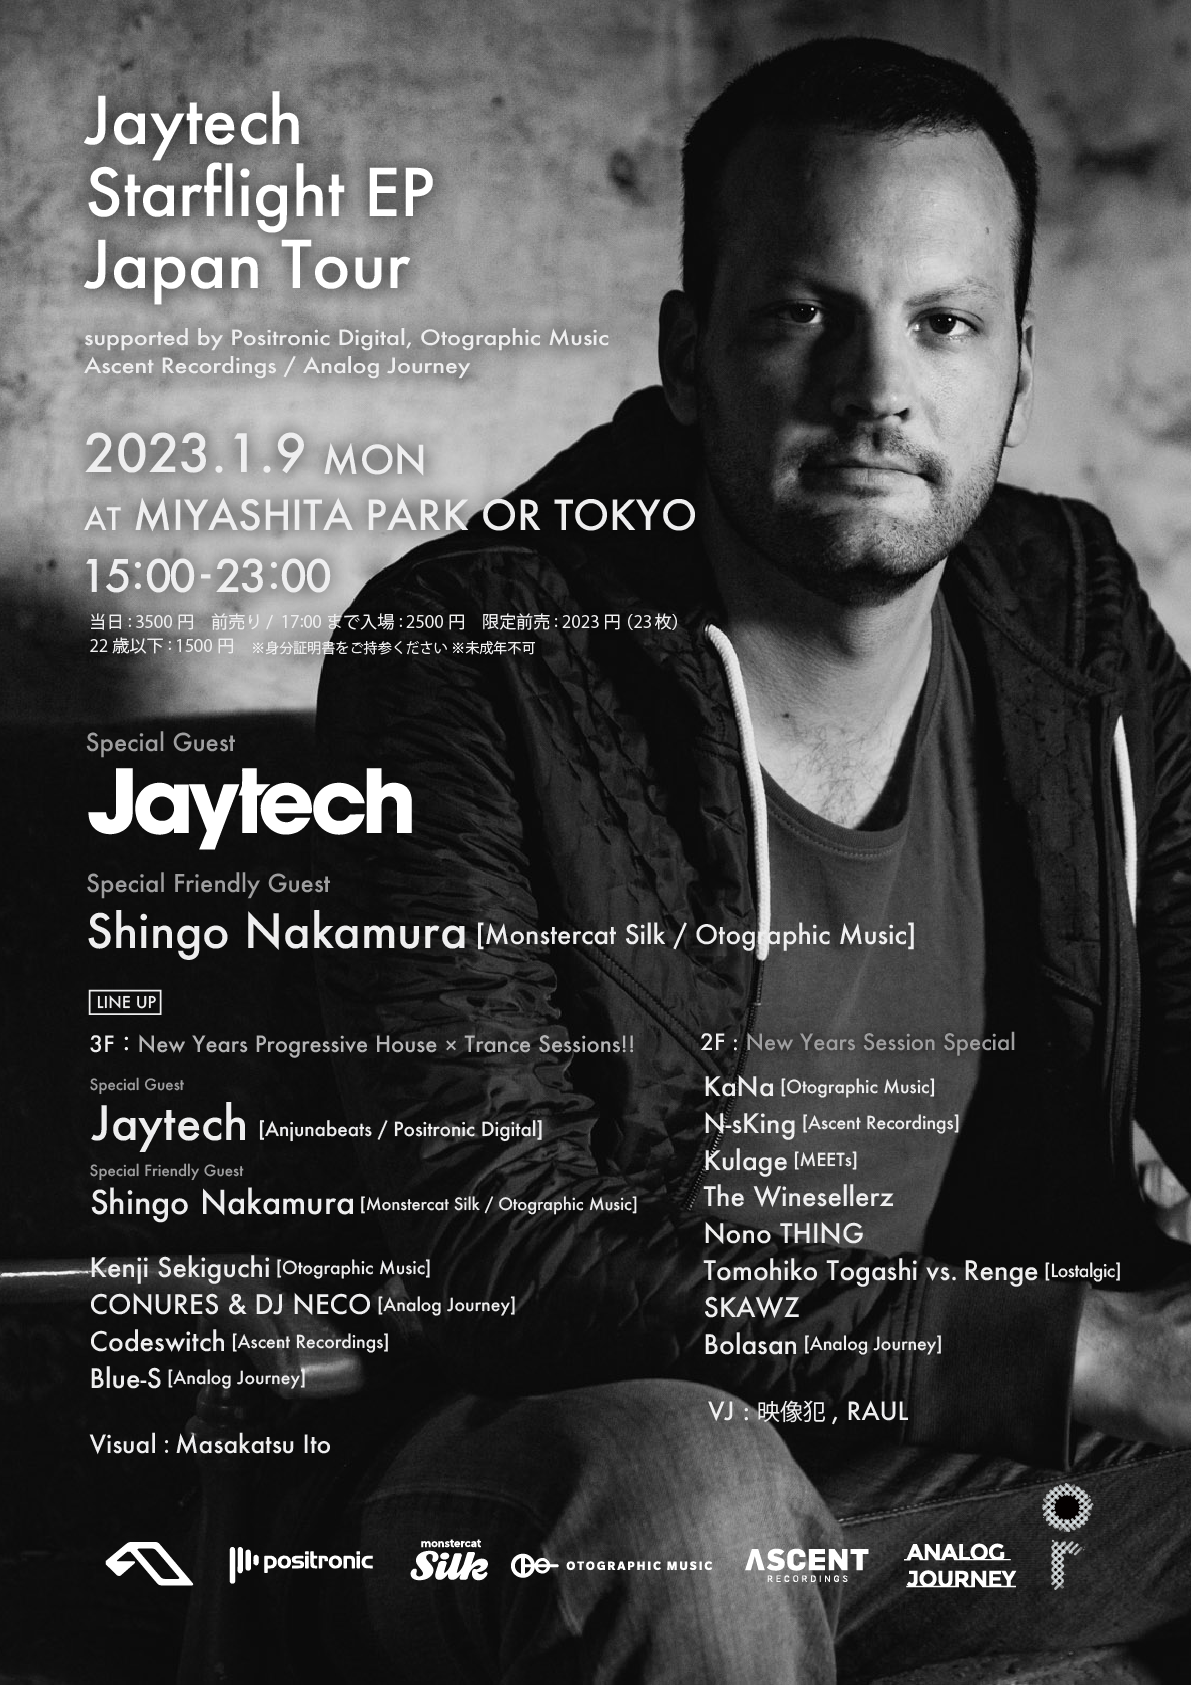 2023.1.09 Jaytech "Starflight" Japan Tour @ Miyashita Park OR